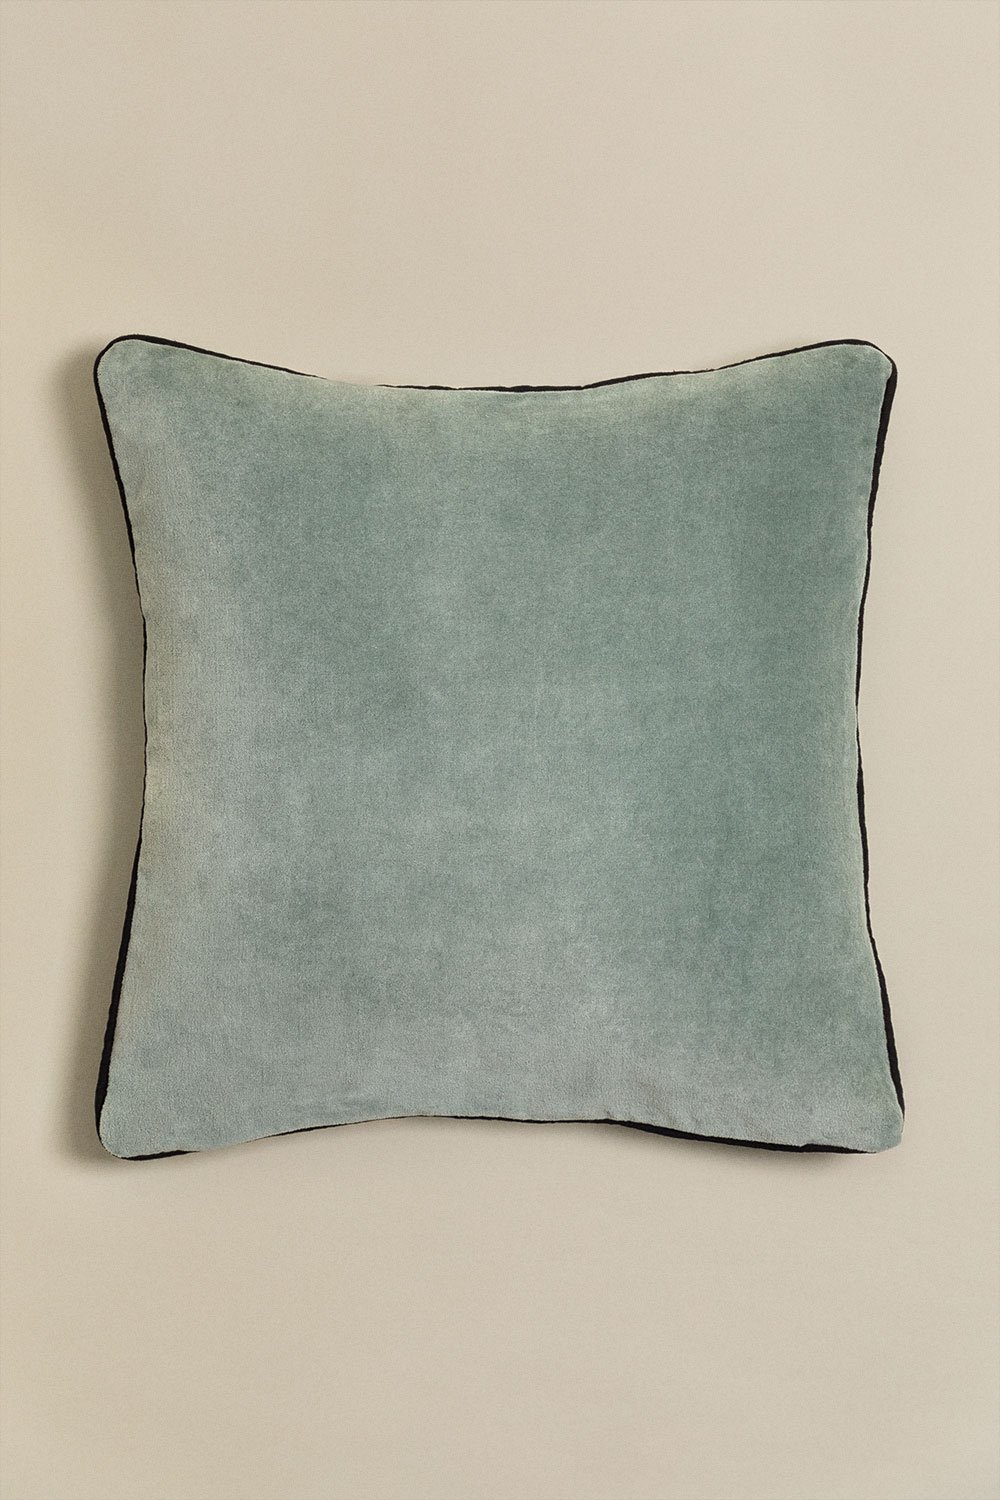 Square Velvet Cushion (40x40 cm) Zarbel, gallery image 1